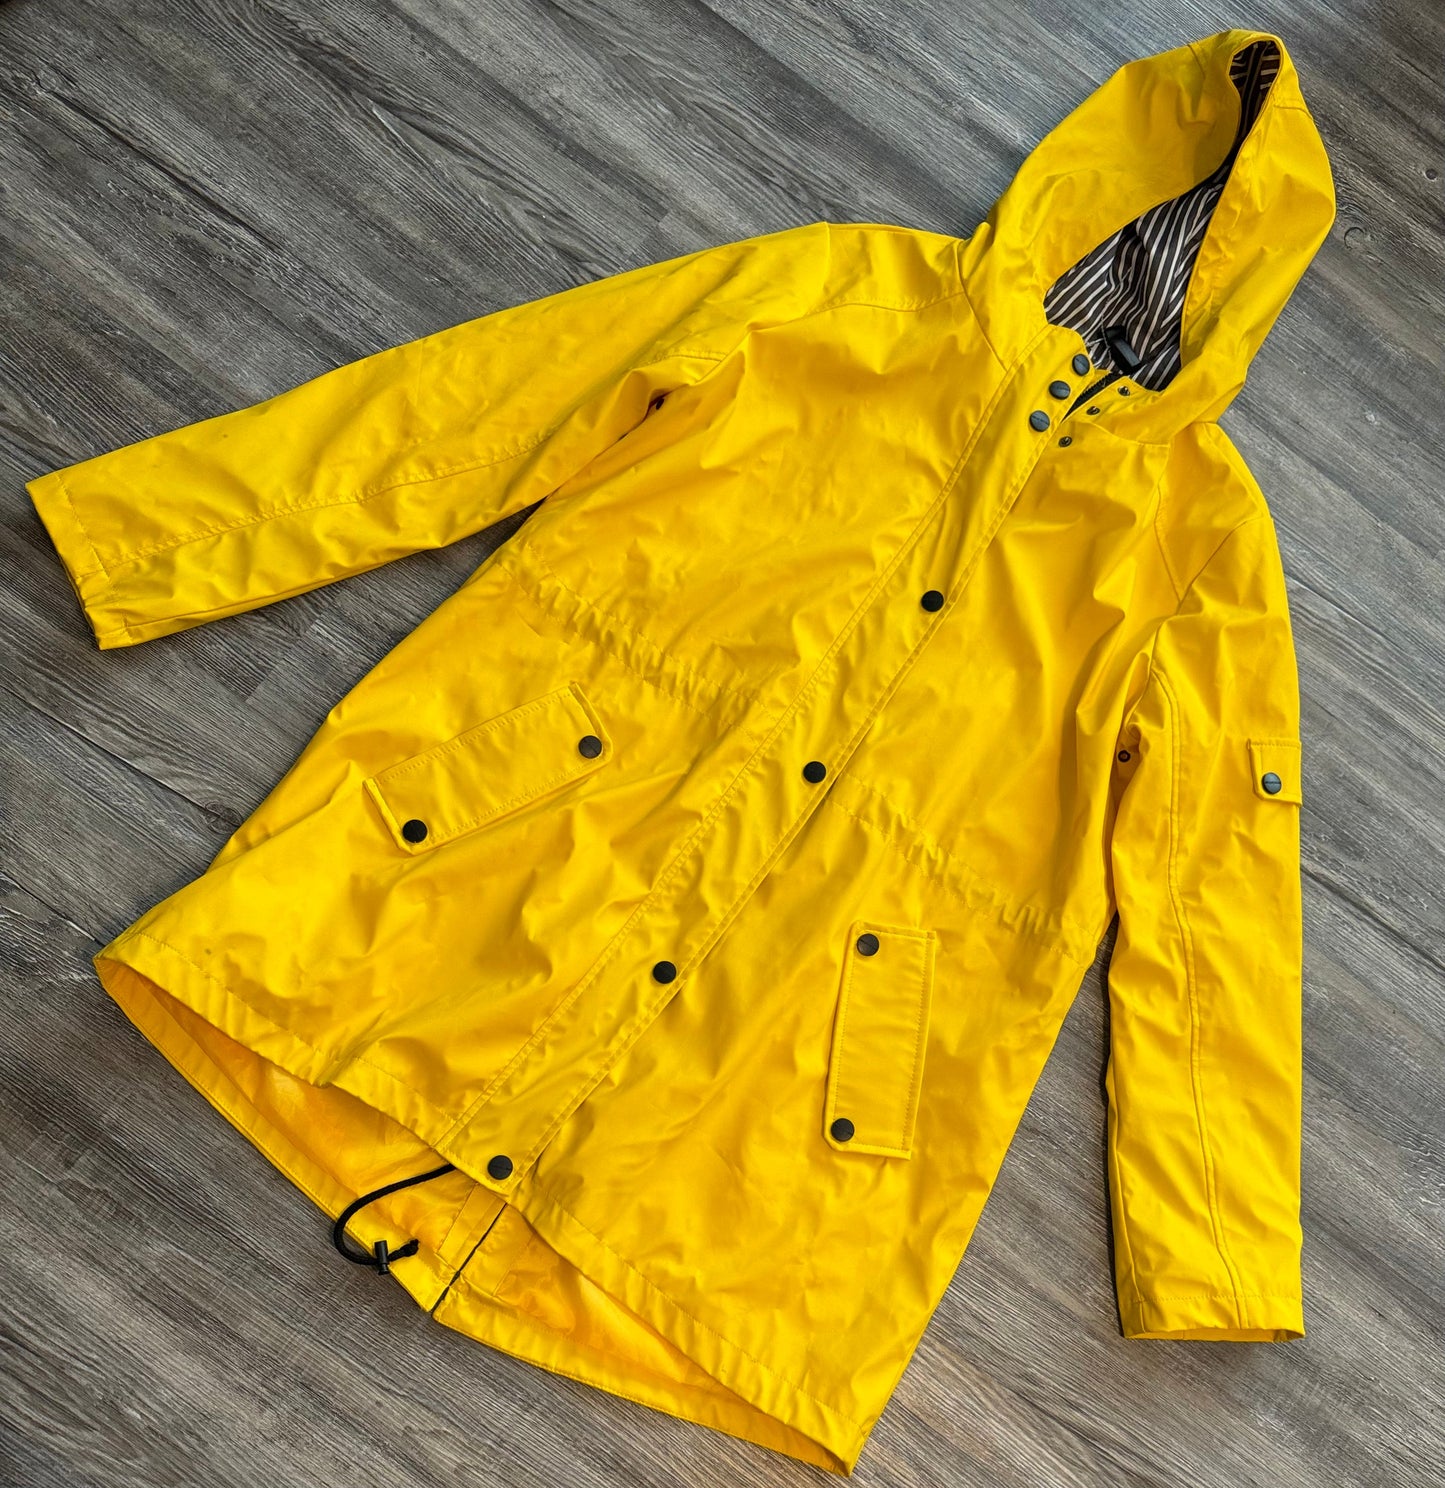 Coat Raincoat By Clothes Mentor  Size: L